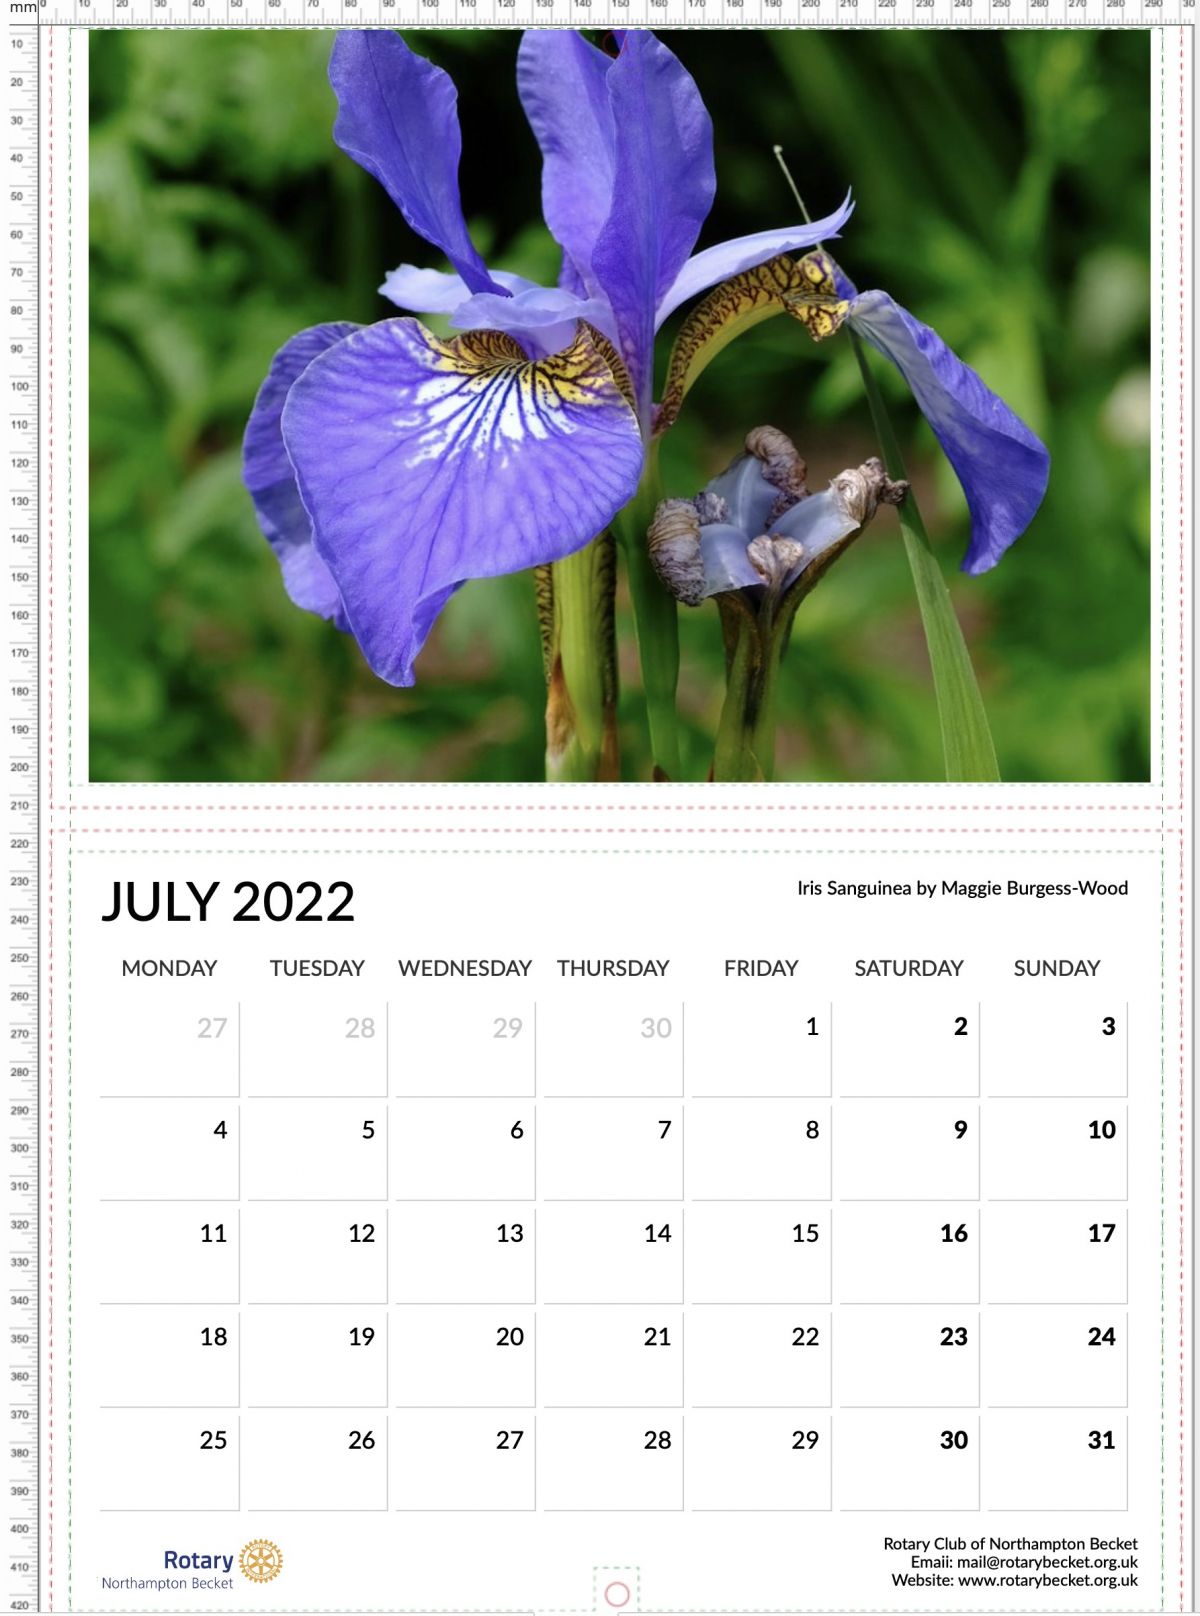 Rotary Becket 2022 Charity Calendar - 